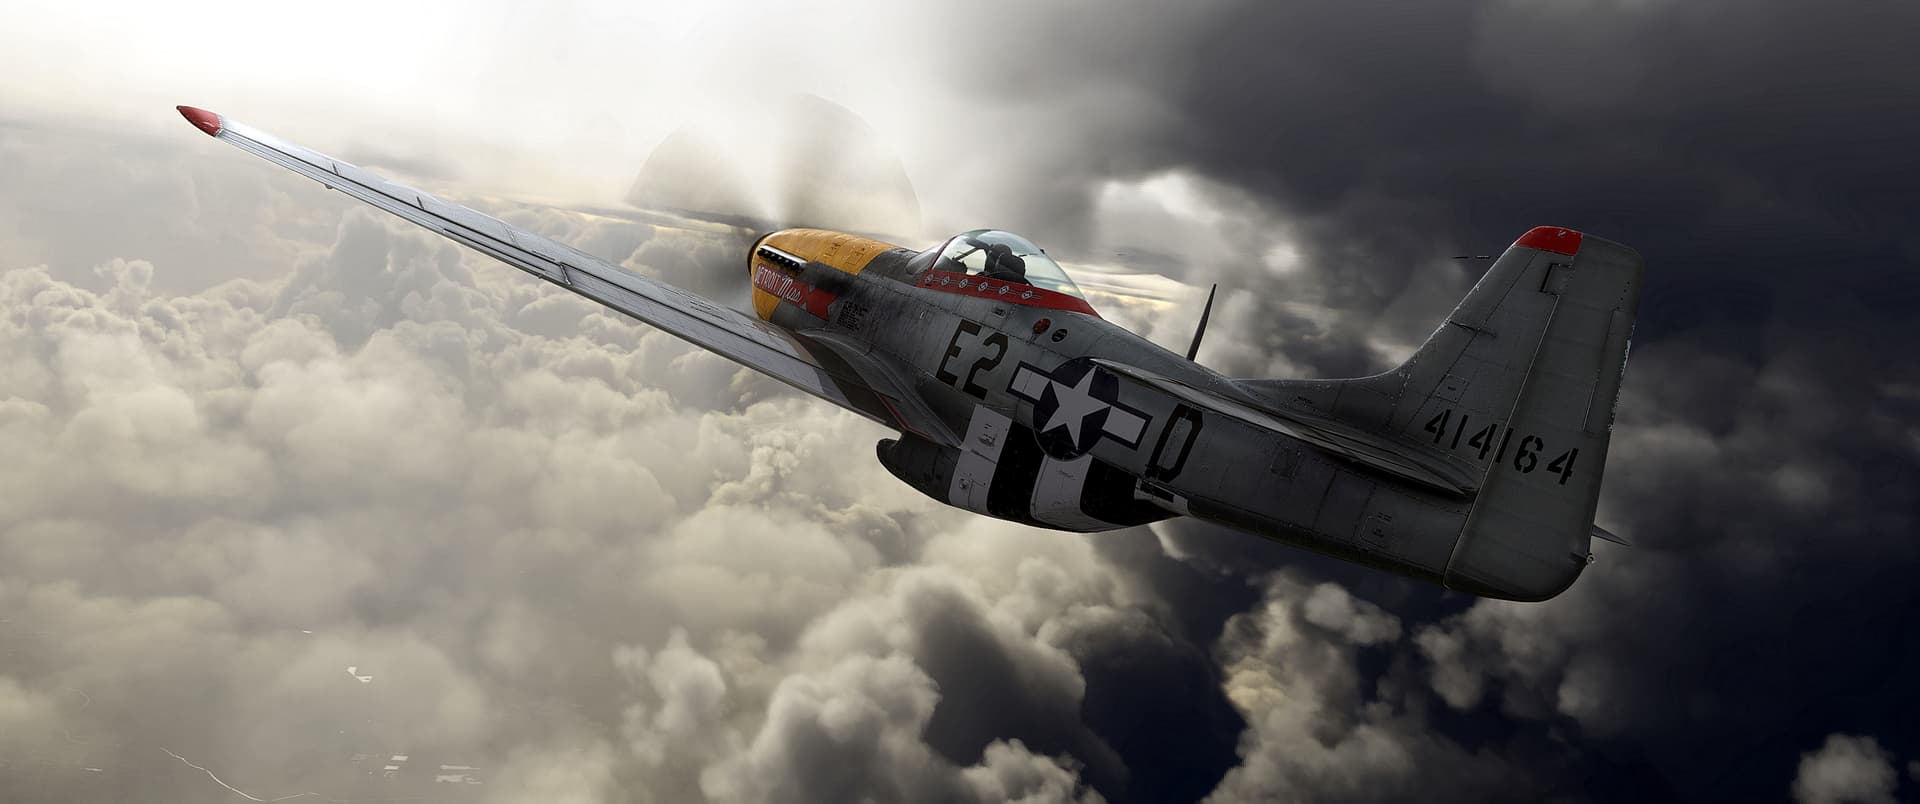 A P-51 Mustang flies in between stormy clouds